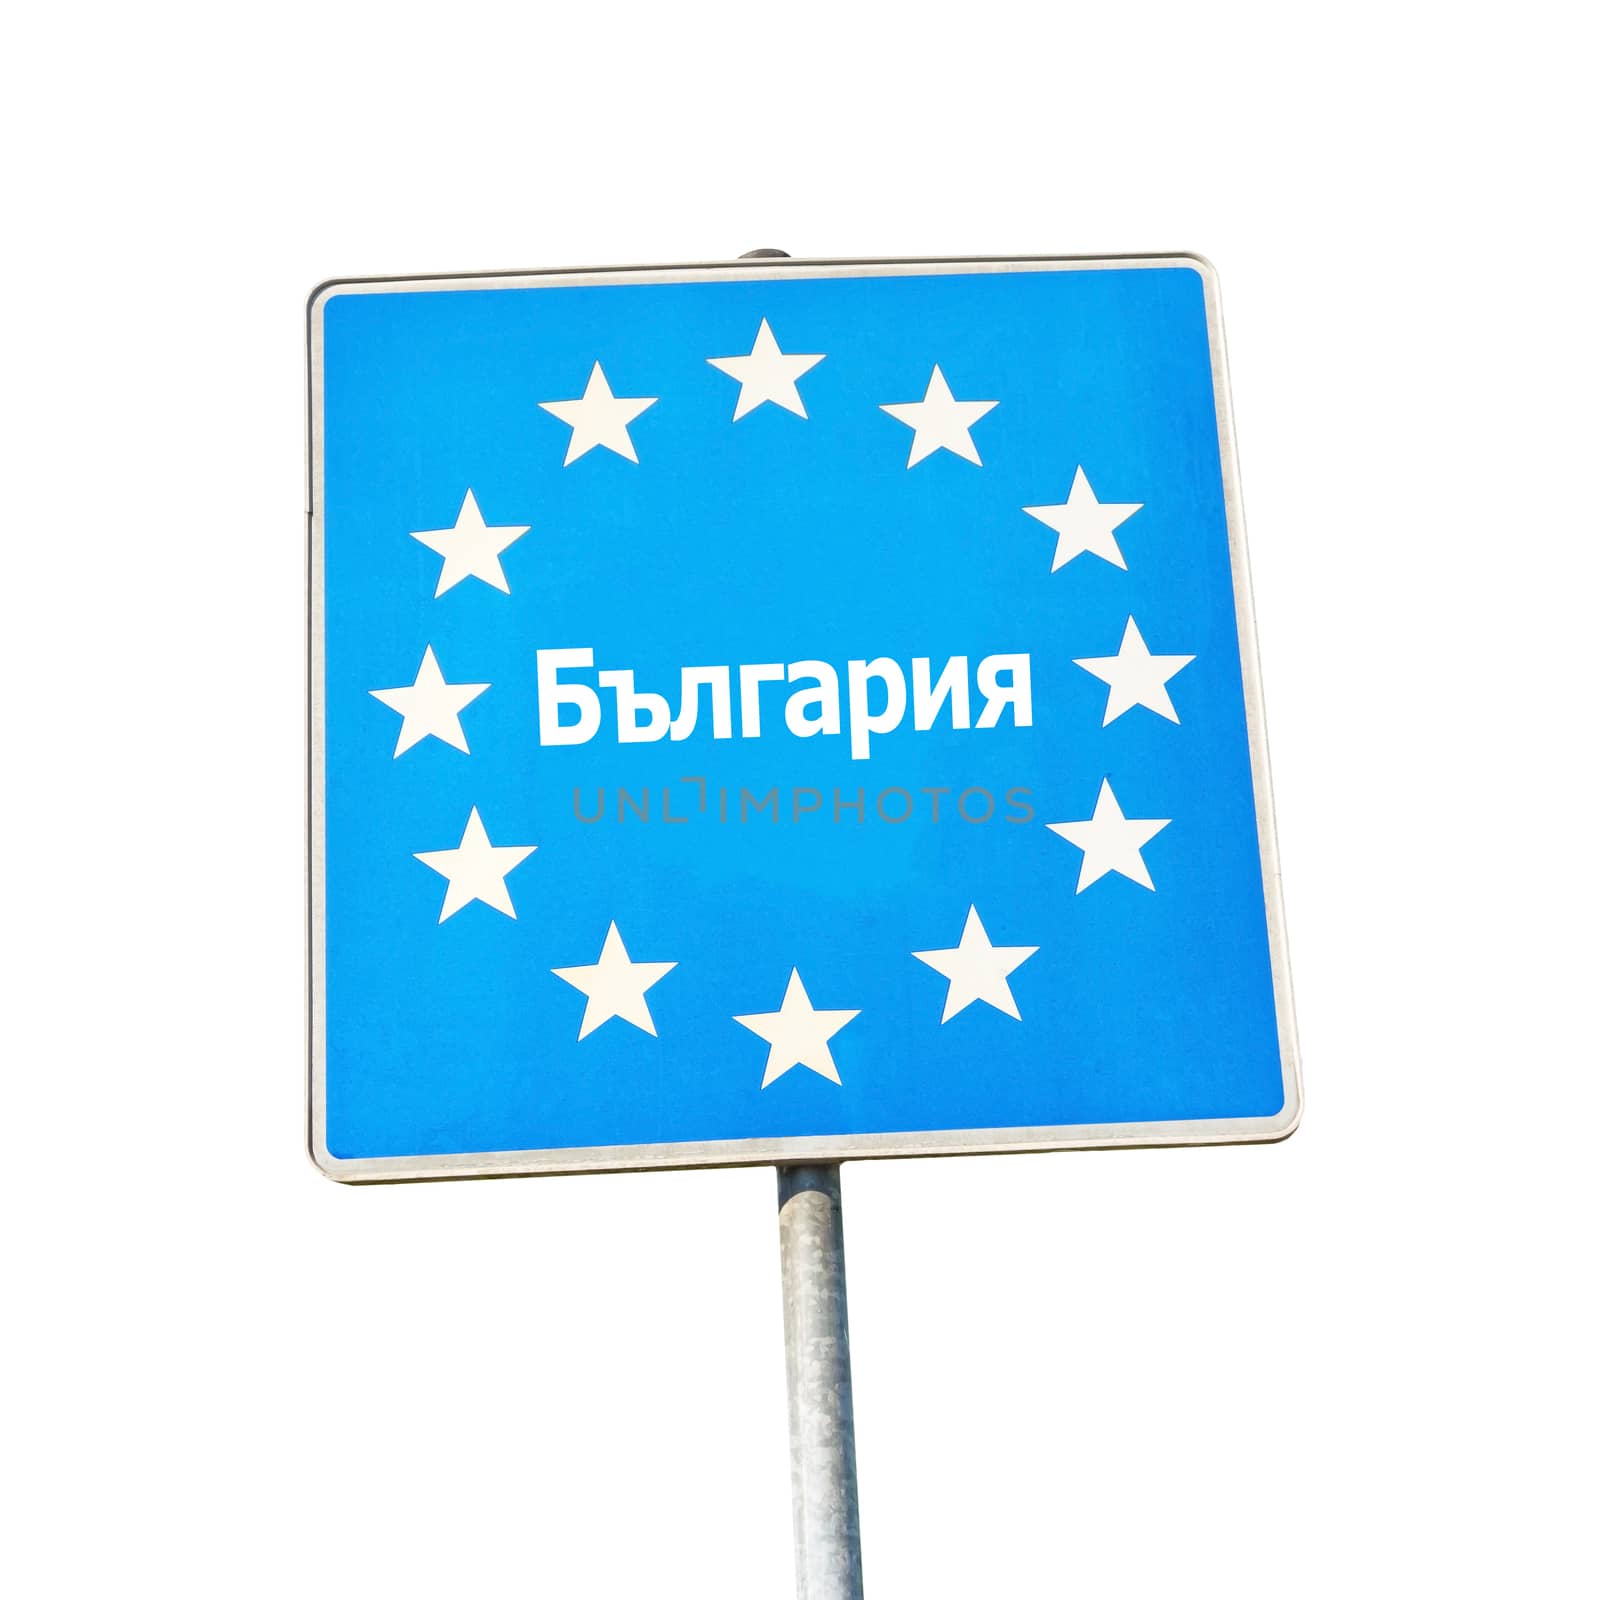 Border sign of bulgaria, europe by aldorado